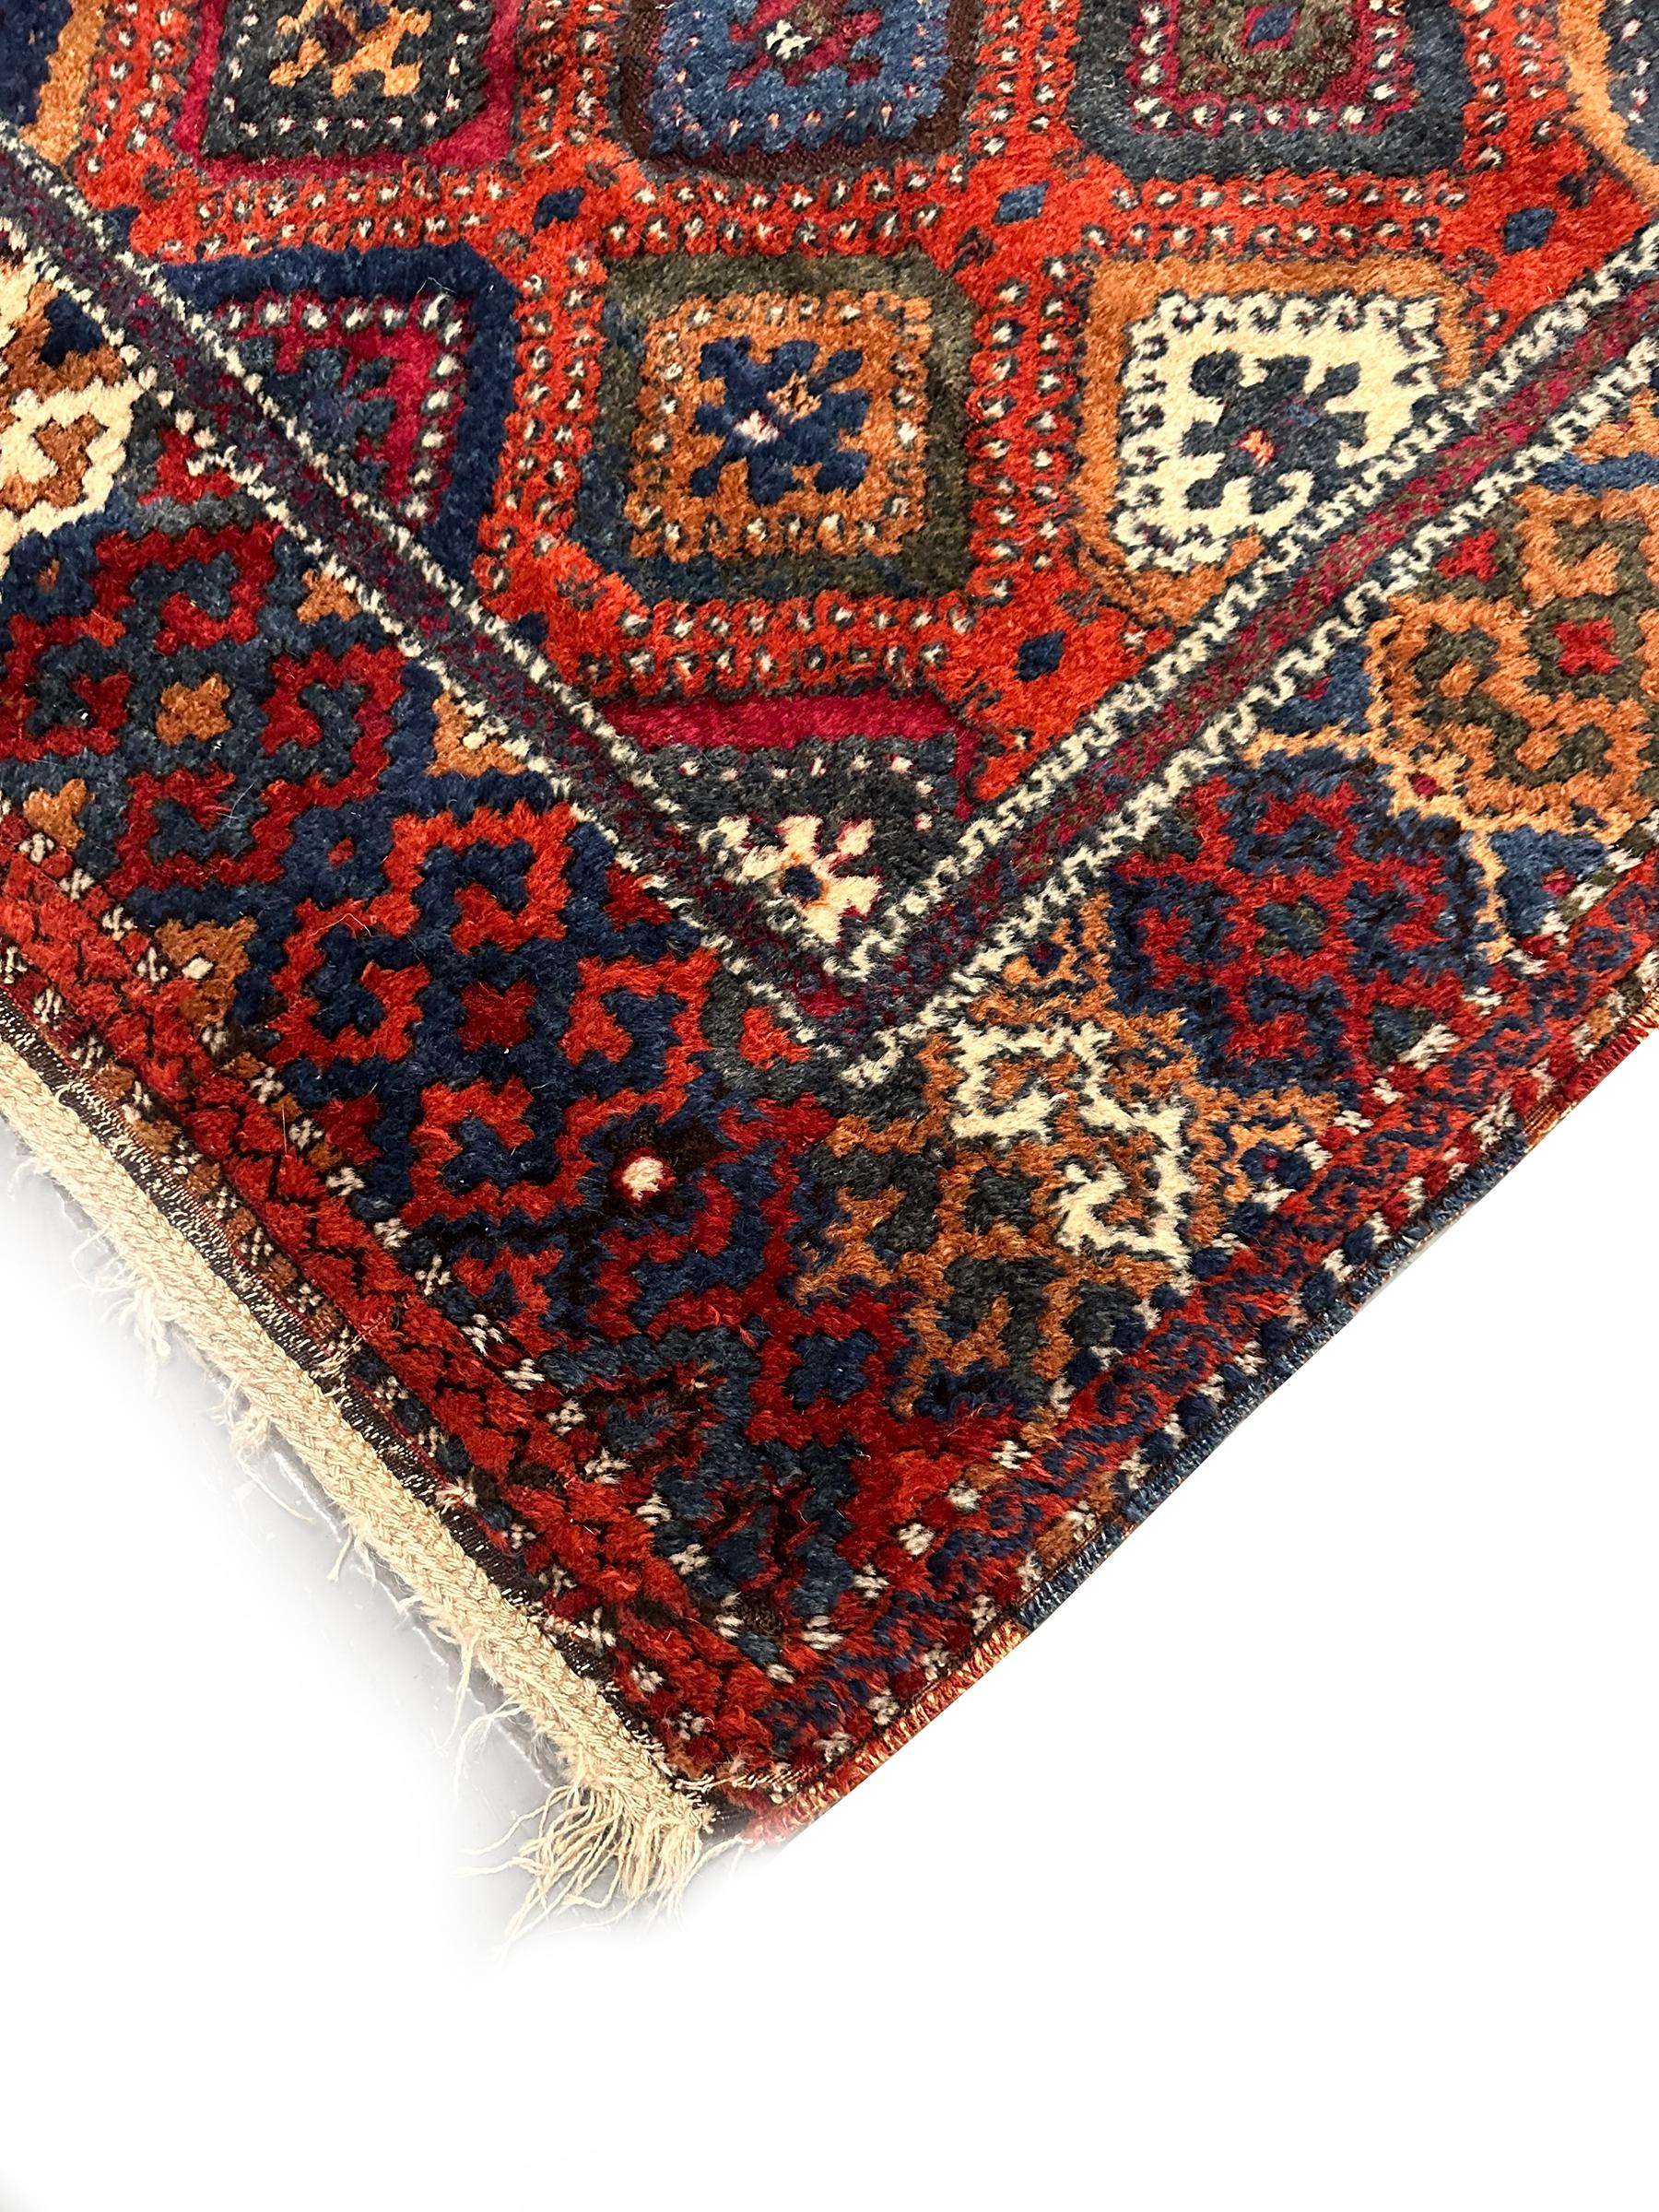 1880 Rare Antique Turkish Rug Tribal Geometric 4x6 130cm x 170cm For Sale 2